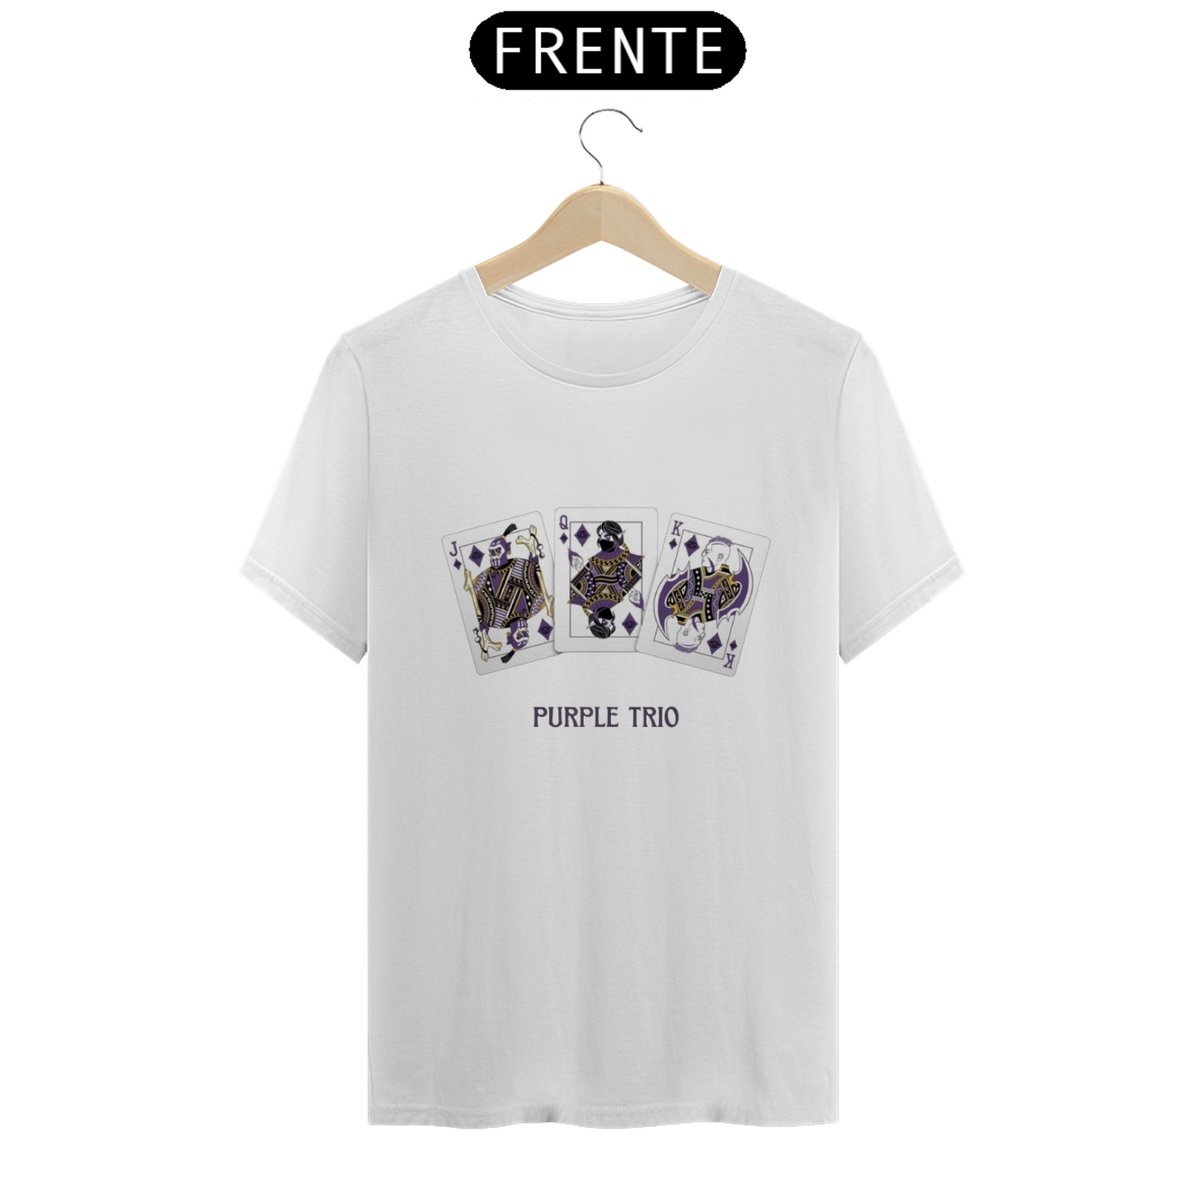 Nome do produto: Camiseta Purple Trio